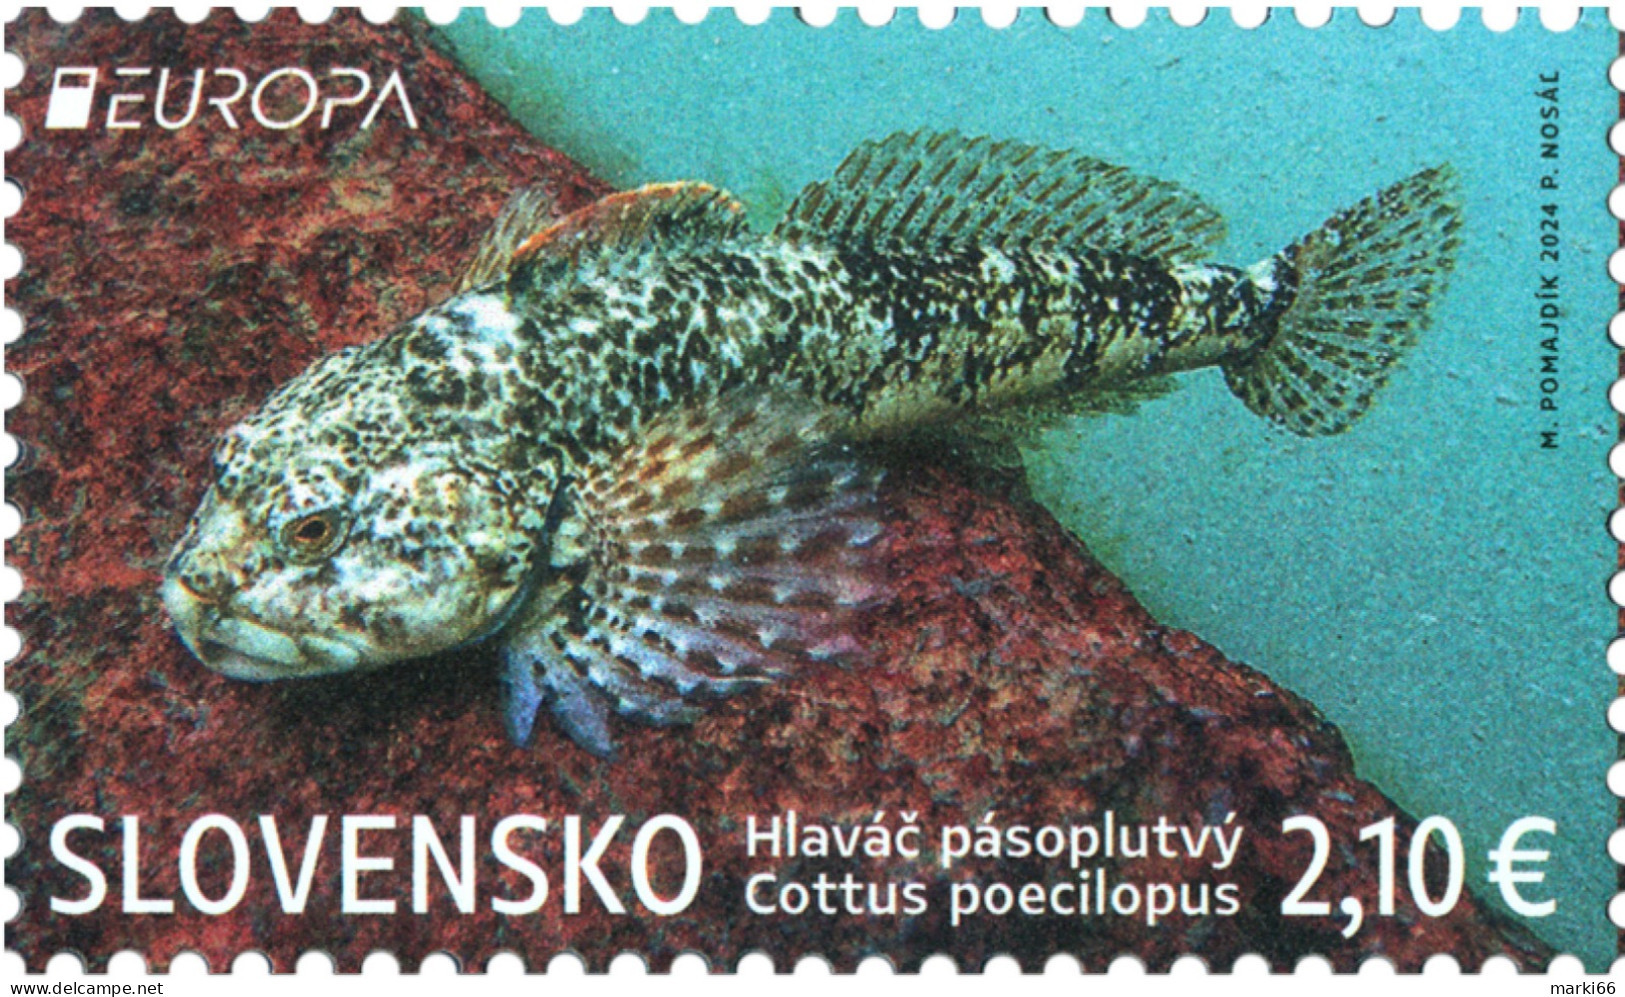 Slovakia - 2024 - Europa CEPT - Underwater Flora - Alpine Bullhead Fish - Mint Stamp - Nuovi